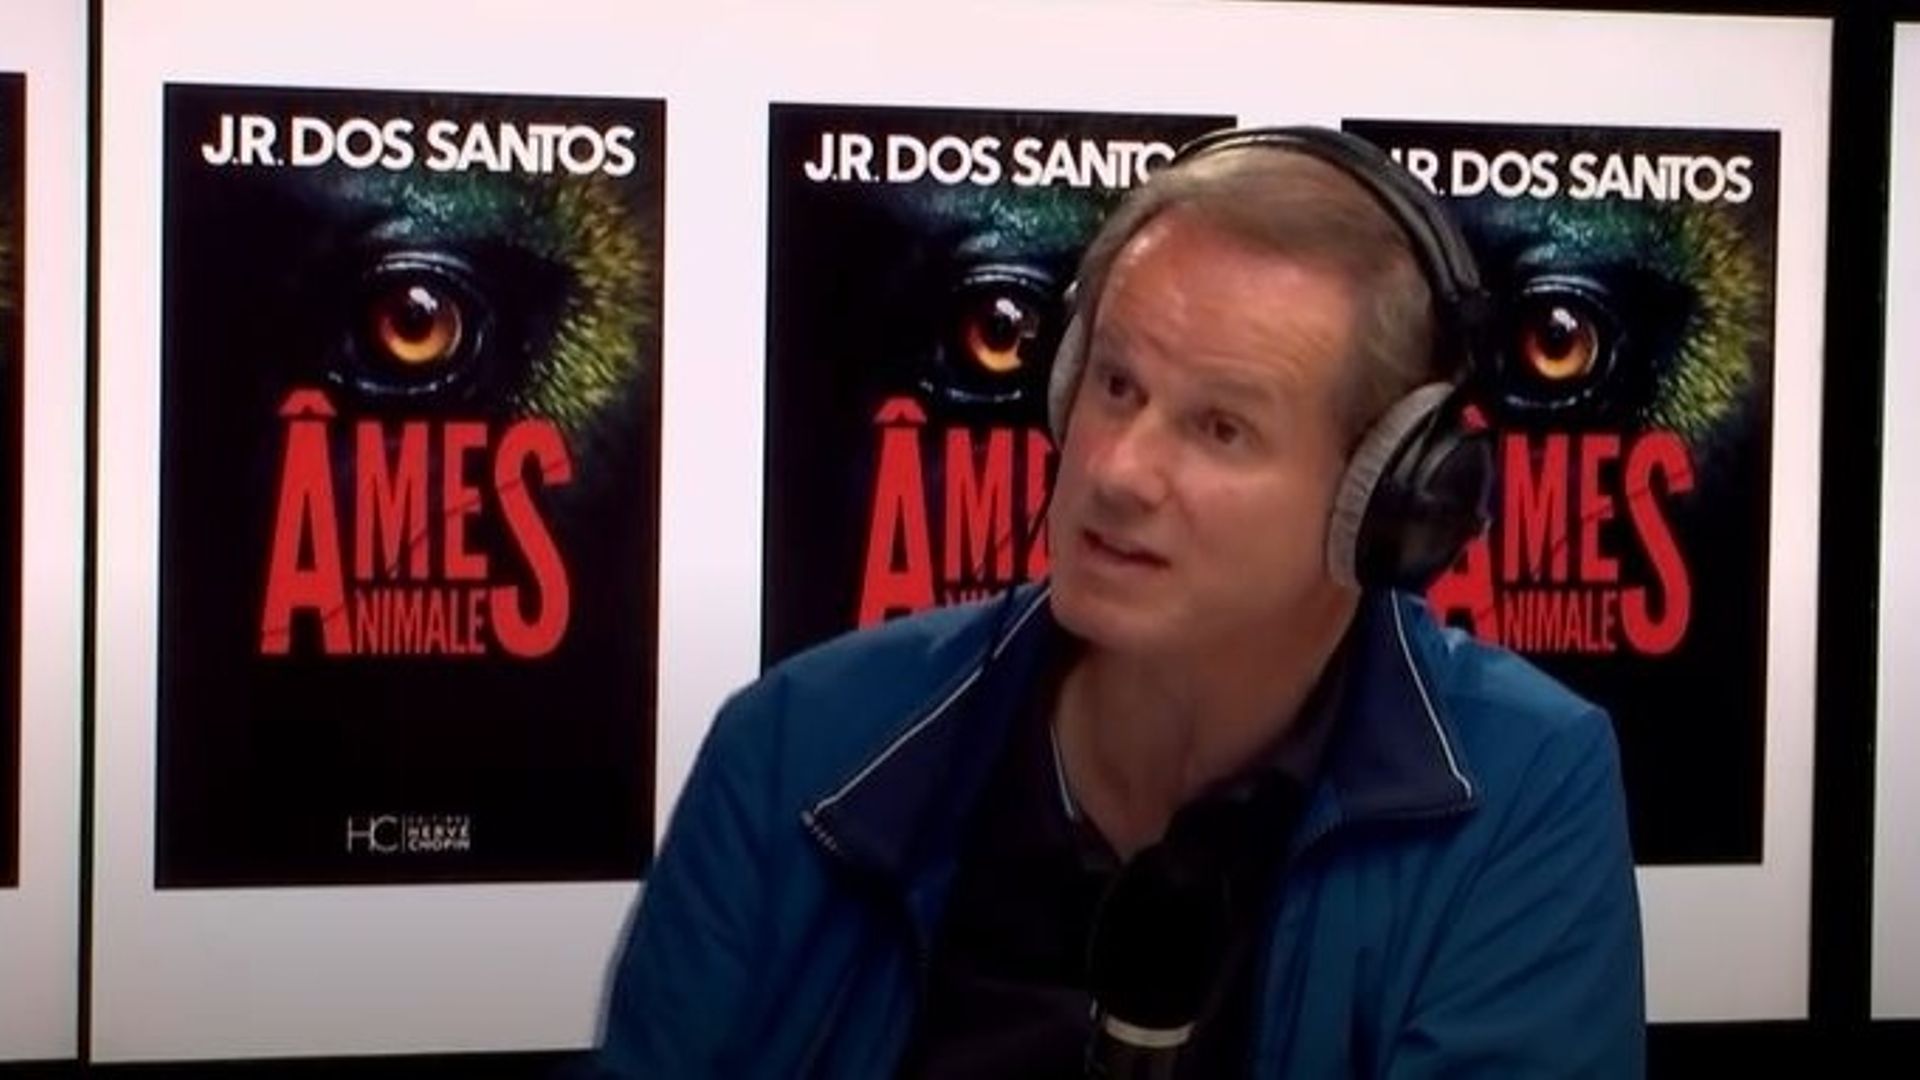 J.R. dos Santos pour son roman "Âmes animales"